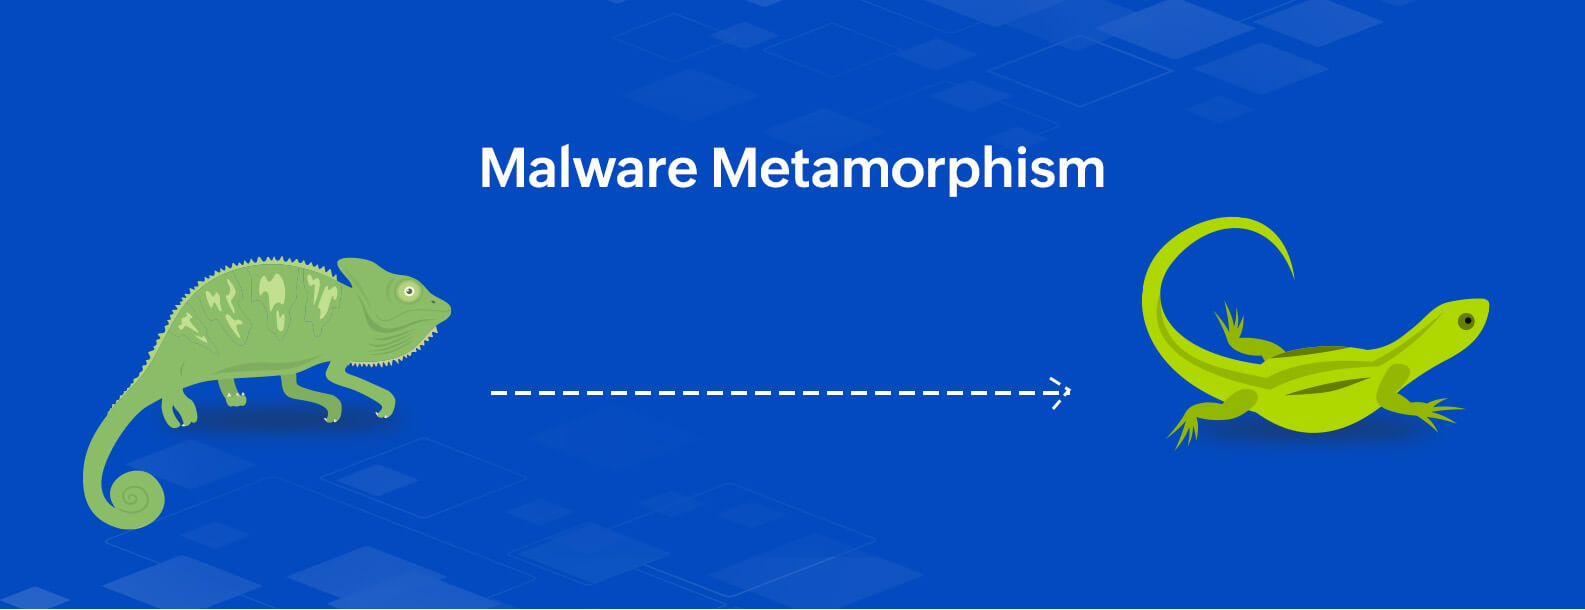 malware-polymorphism-and-metamorphism